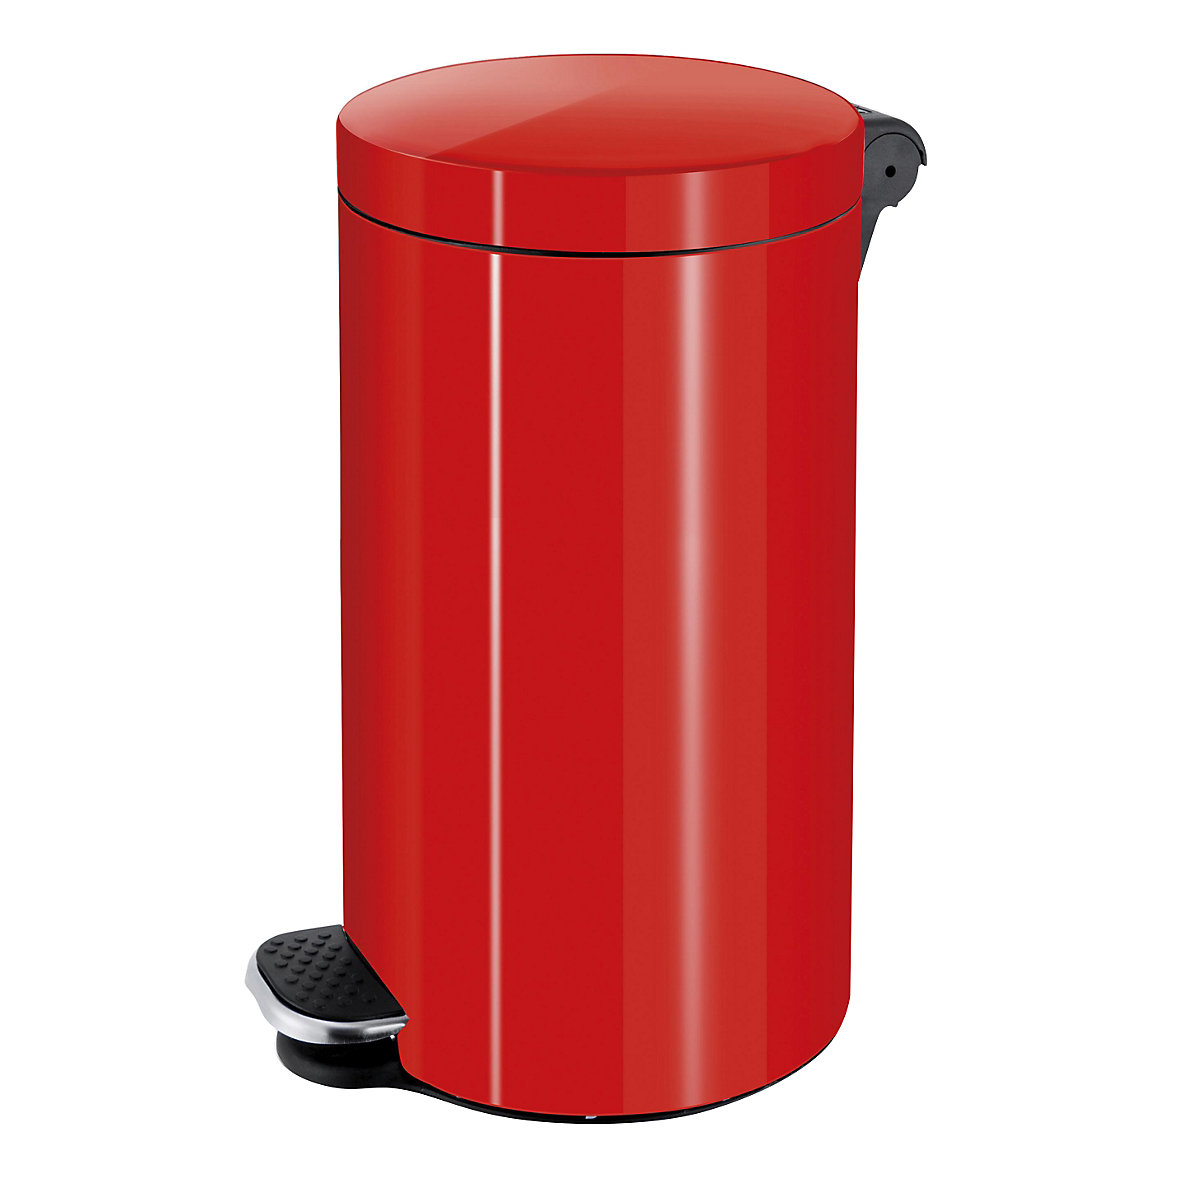 Spremnik za otpad s papučicom, volumen 20 l, VxØ 450 x 300 mm, u crvenoj boji